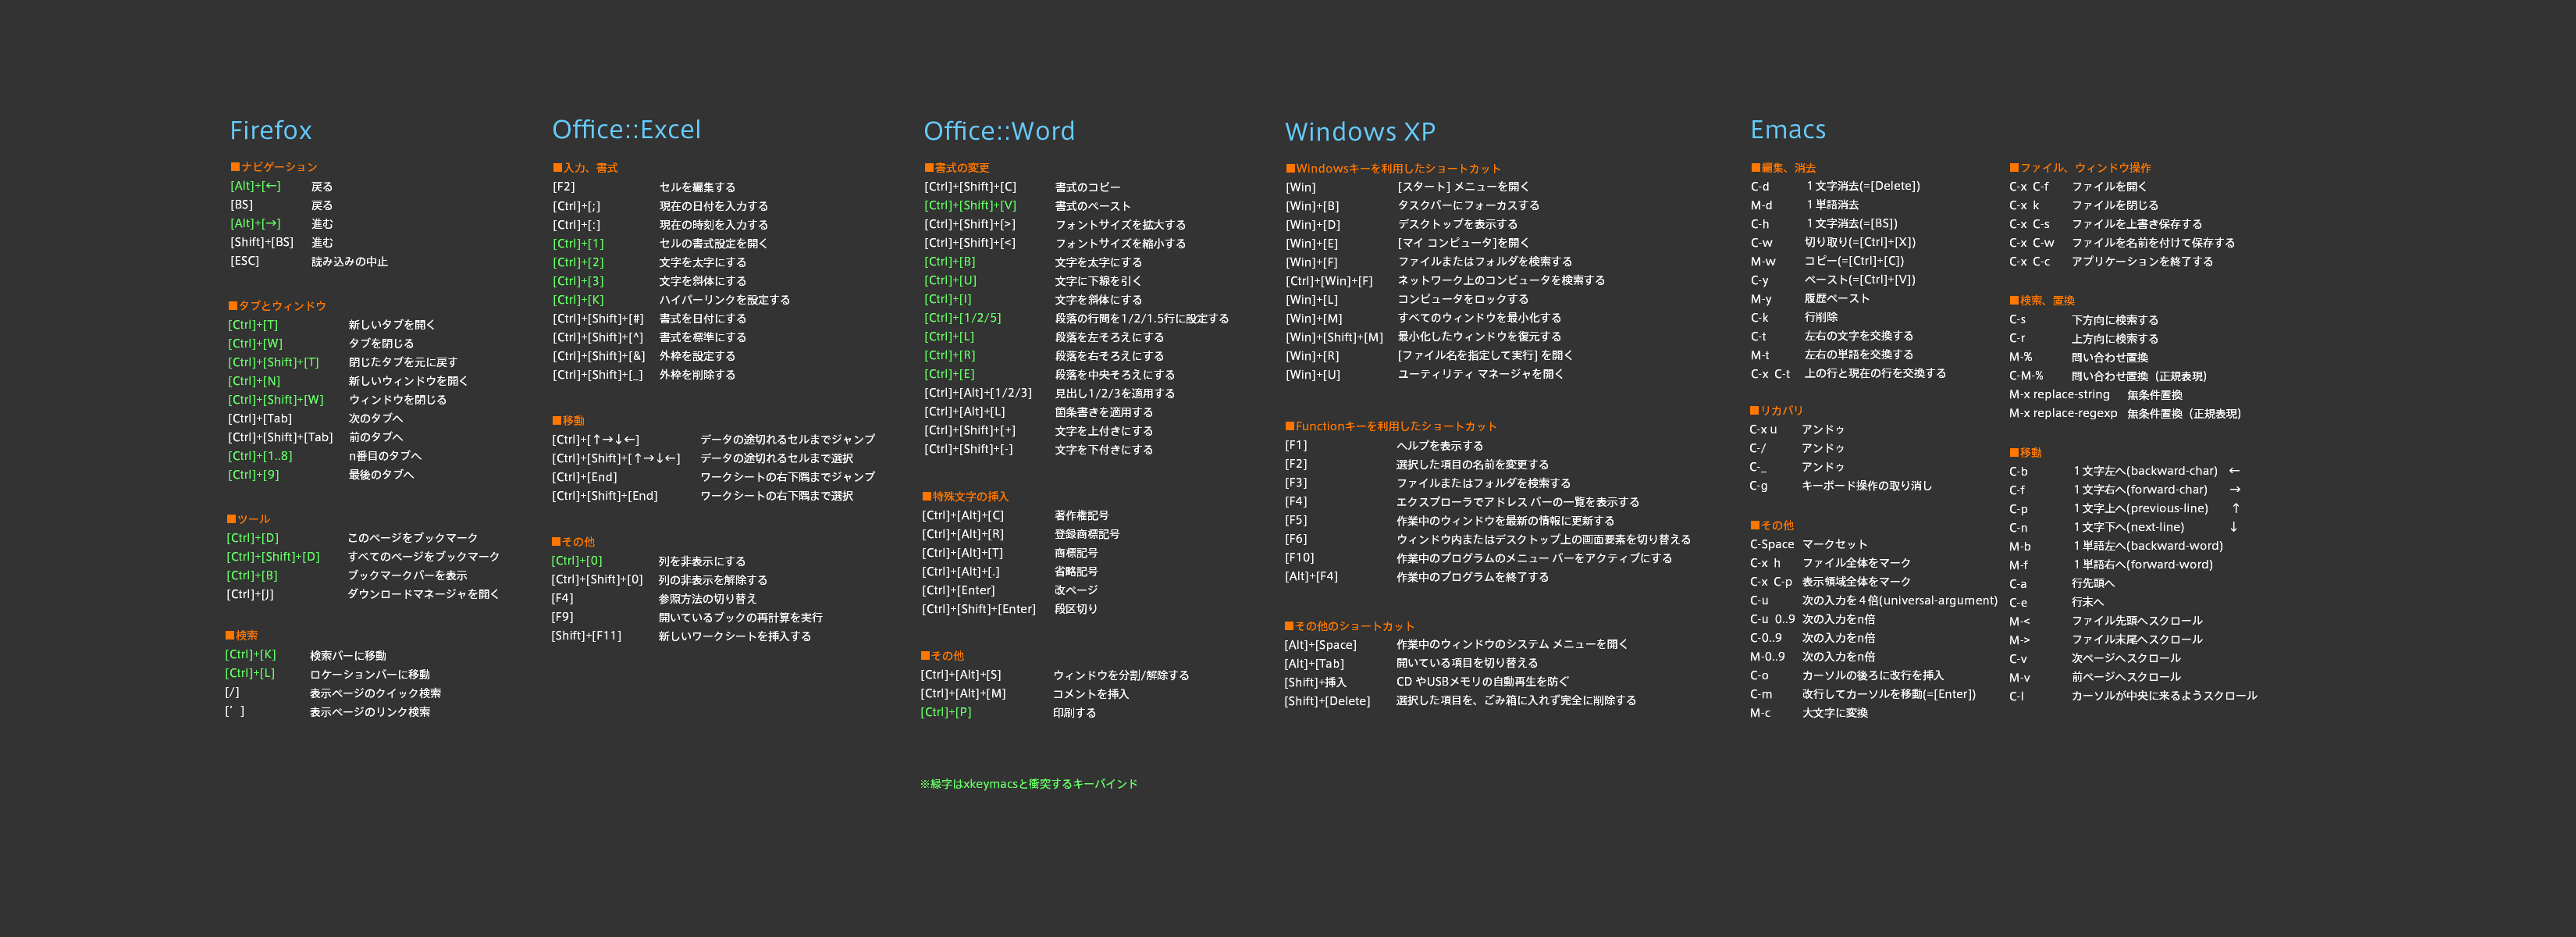 Emacs Xp Firefox Officeのキーバインド壁紙を作ってみた Nyanp Blog